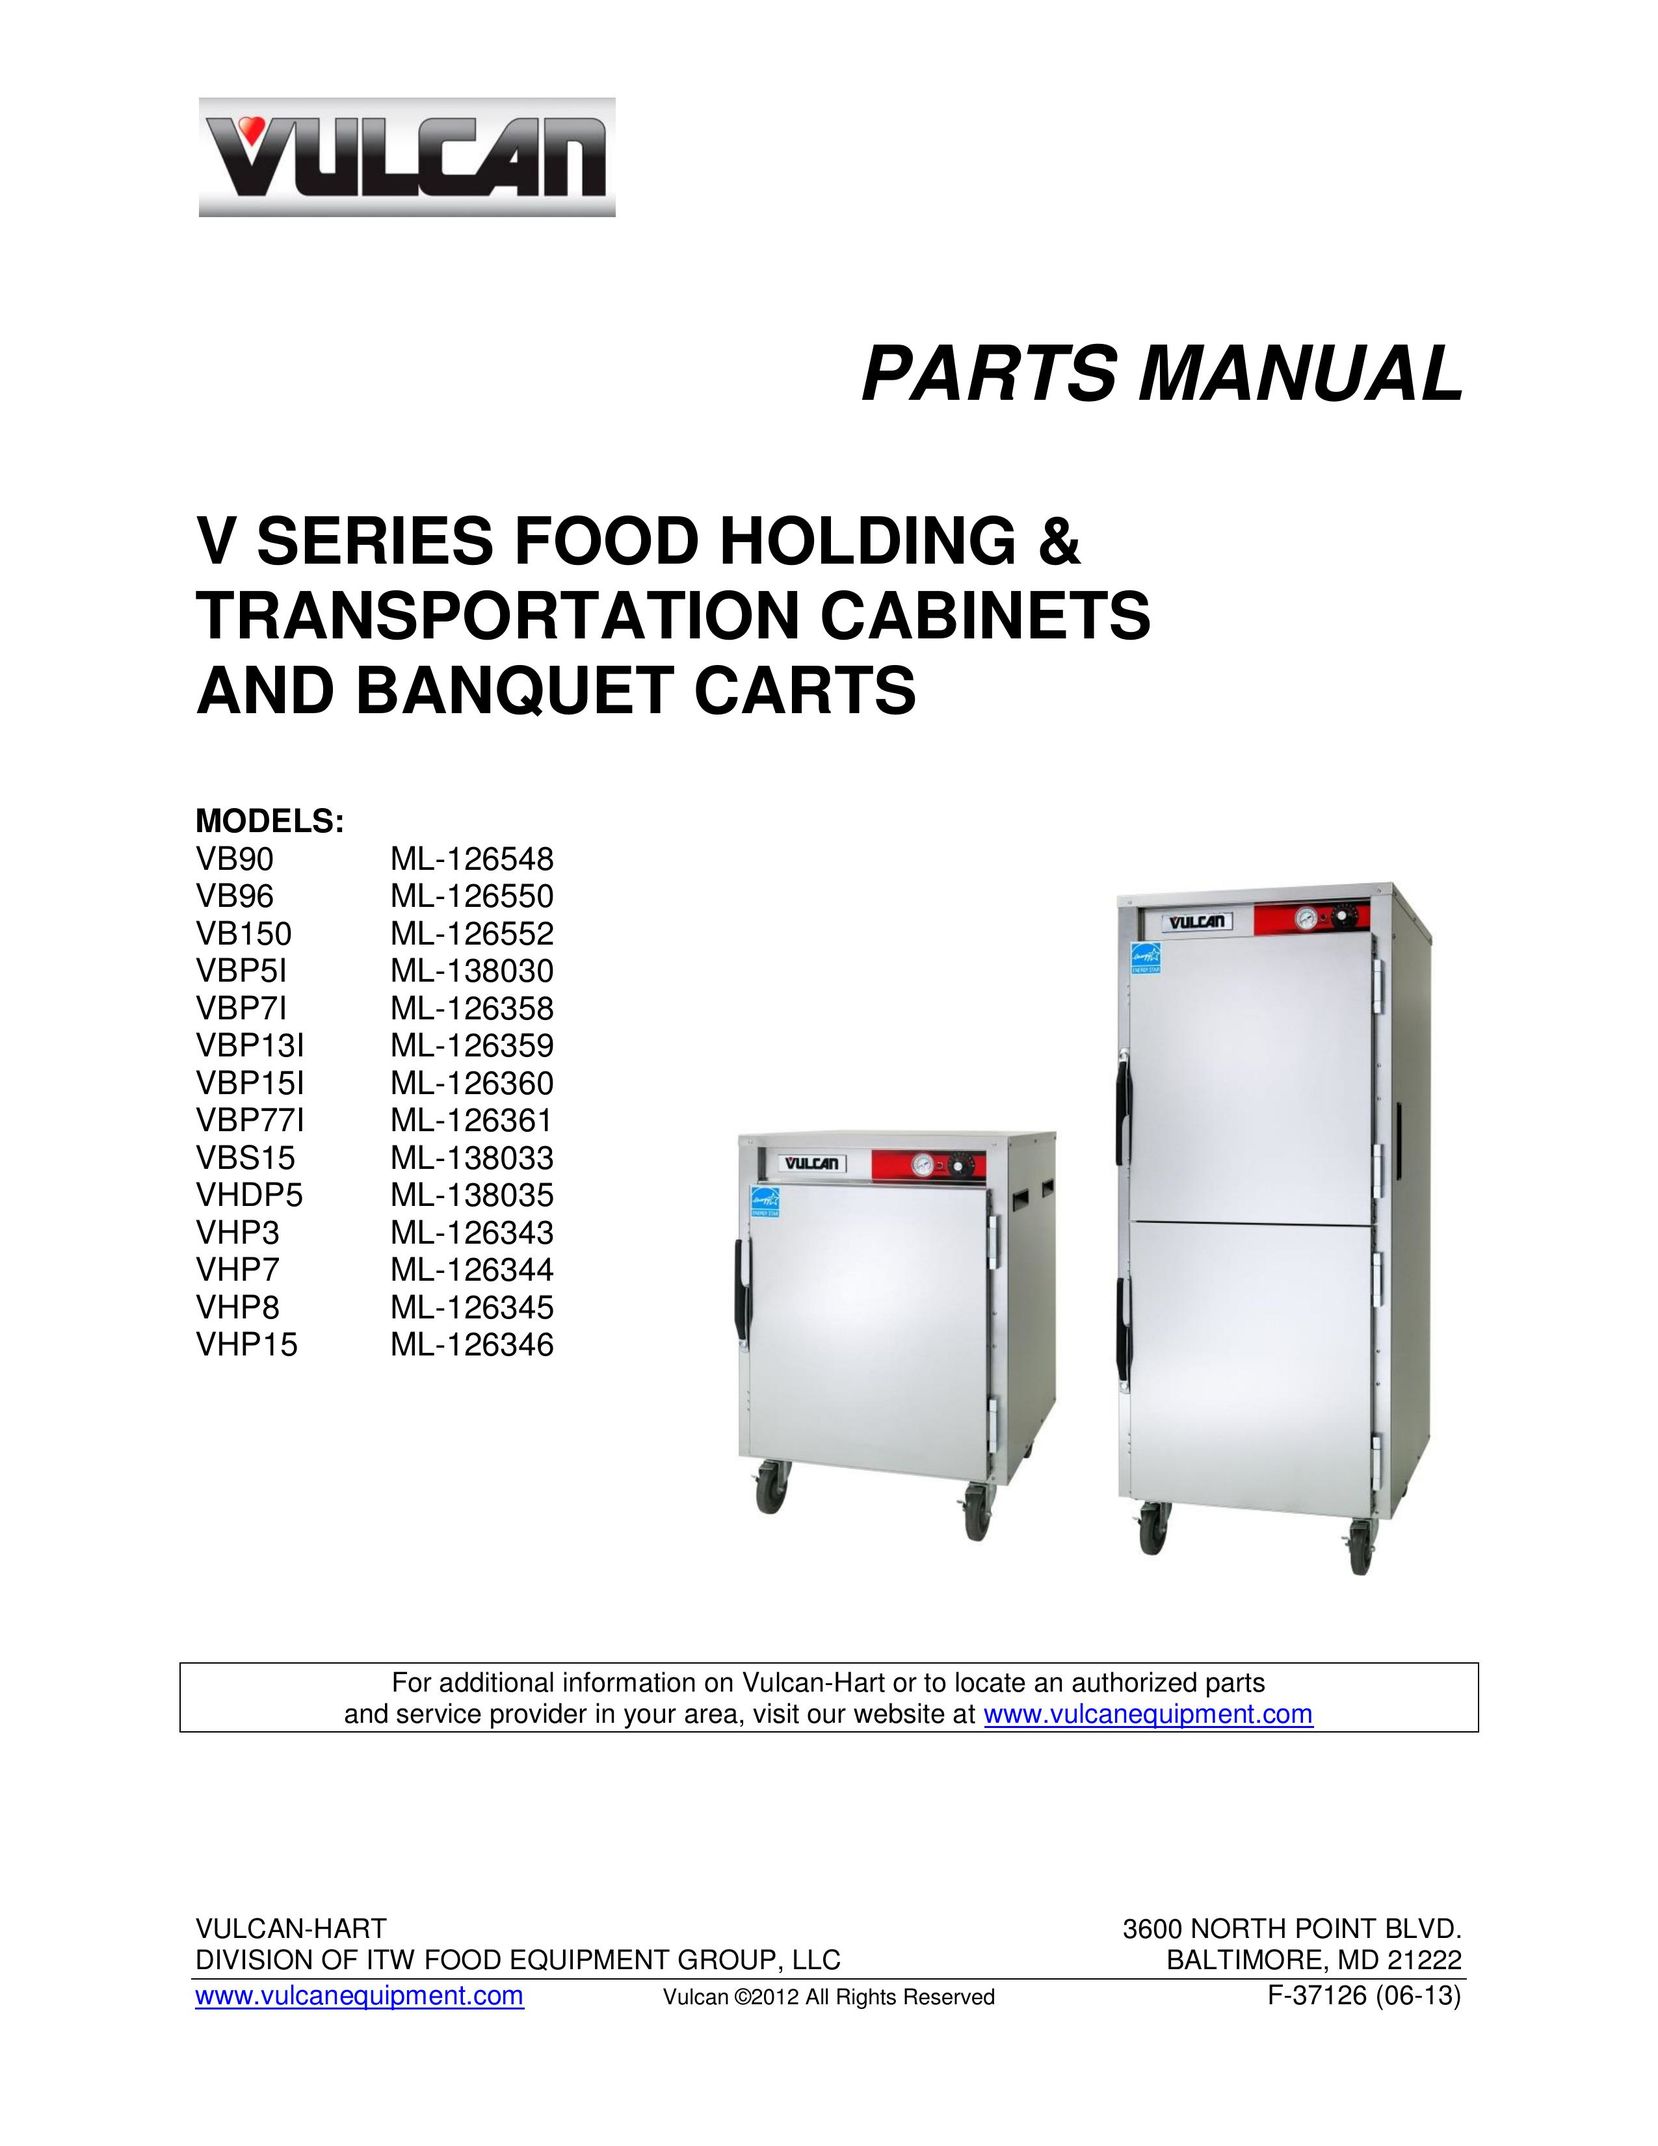 Vulcan-Hart VHP8 ML-126345 TV Mount User Manual